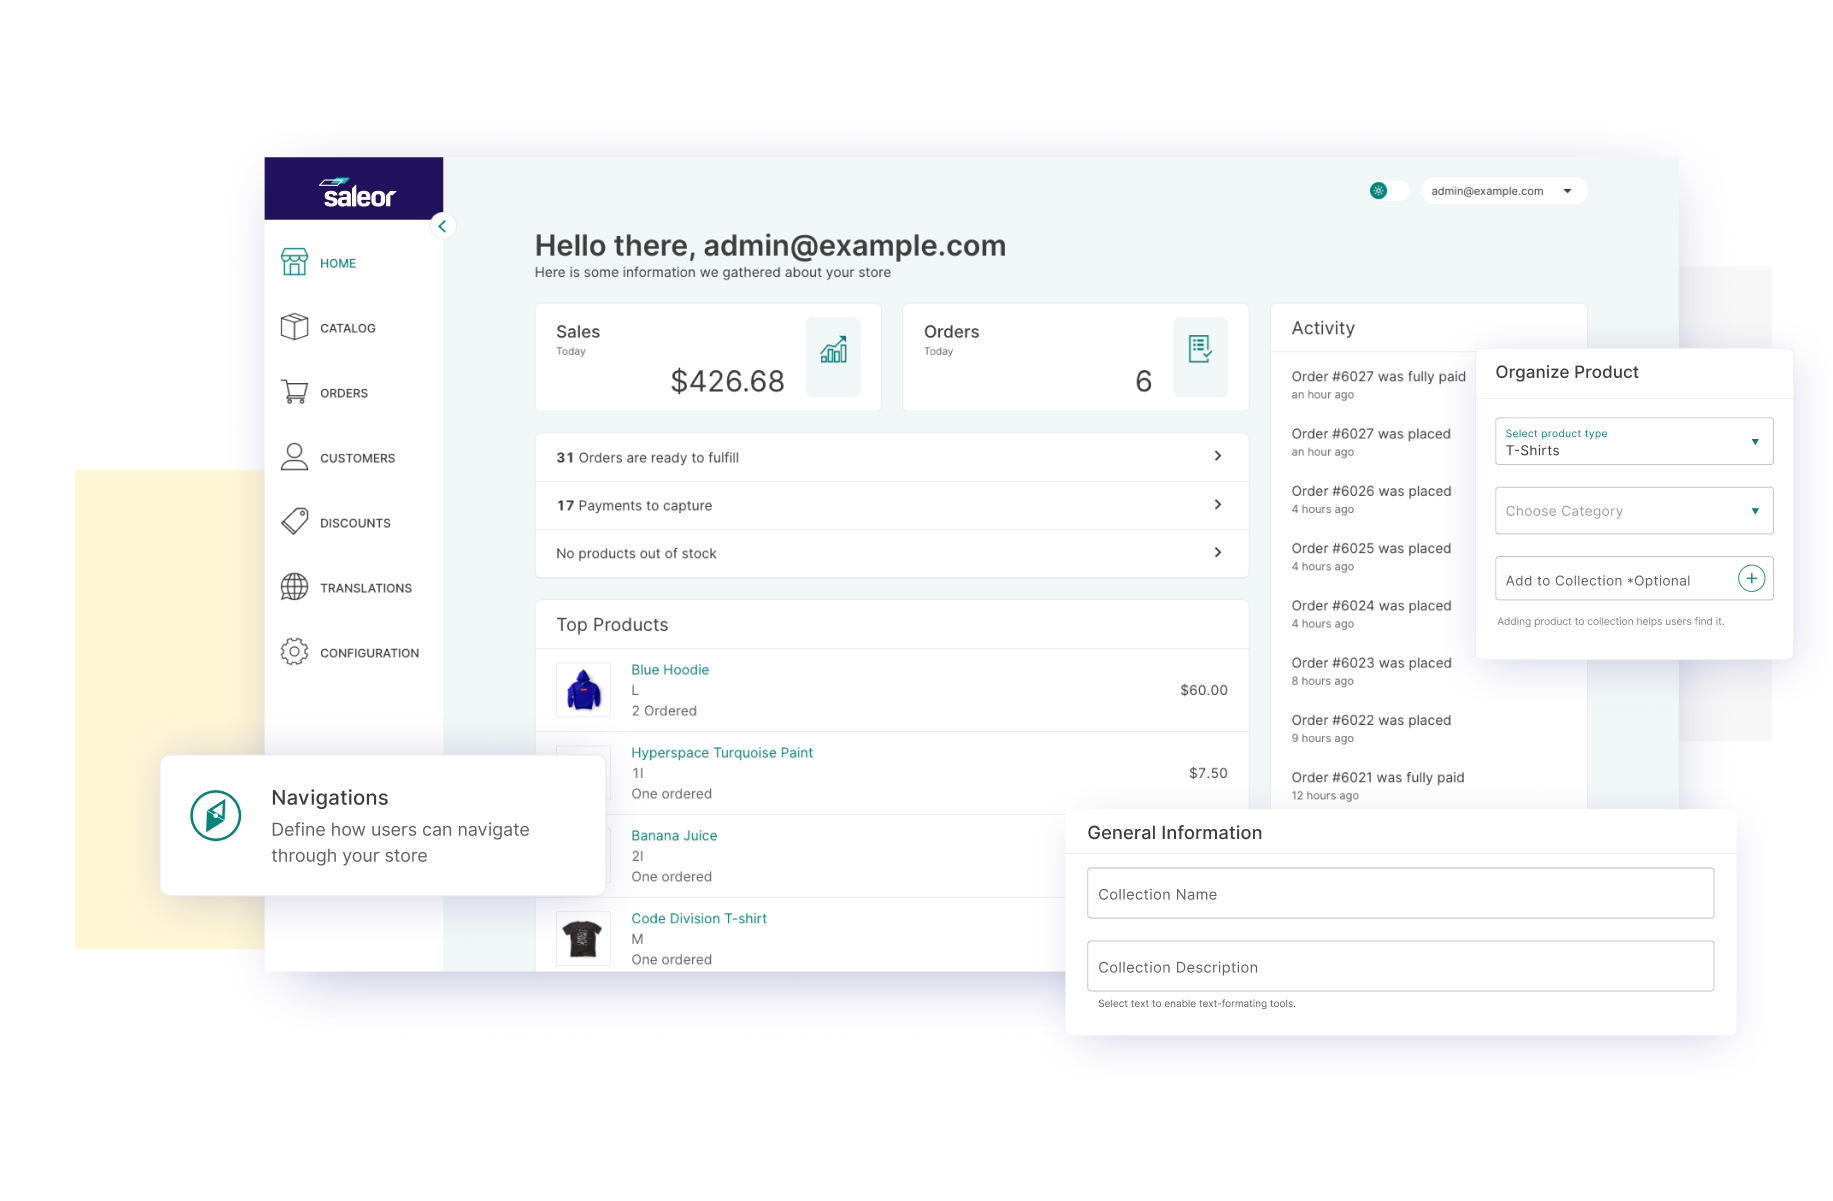 Saleor Dashboard - Modern UI for managing your e-commerce